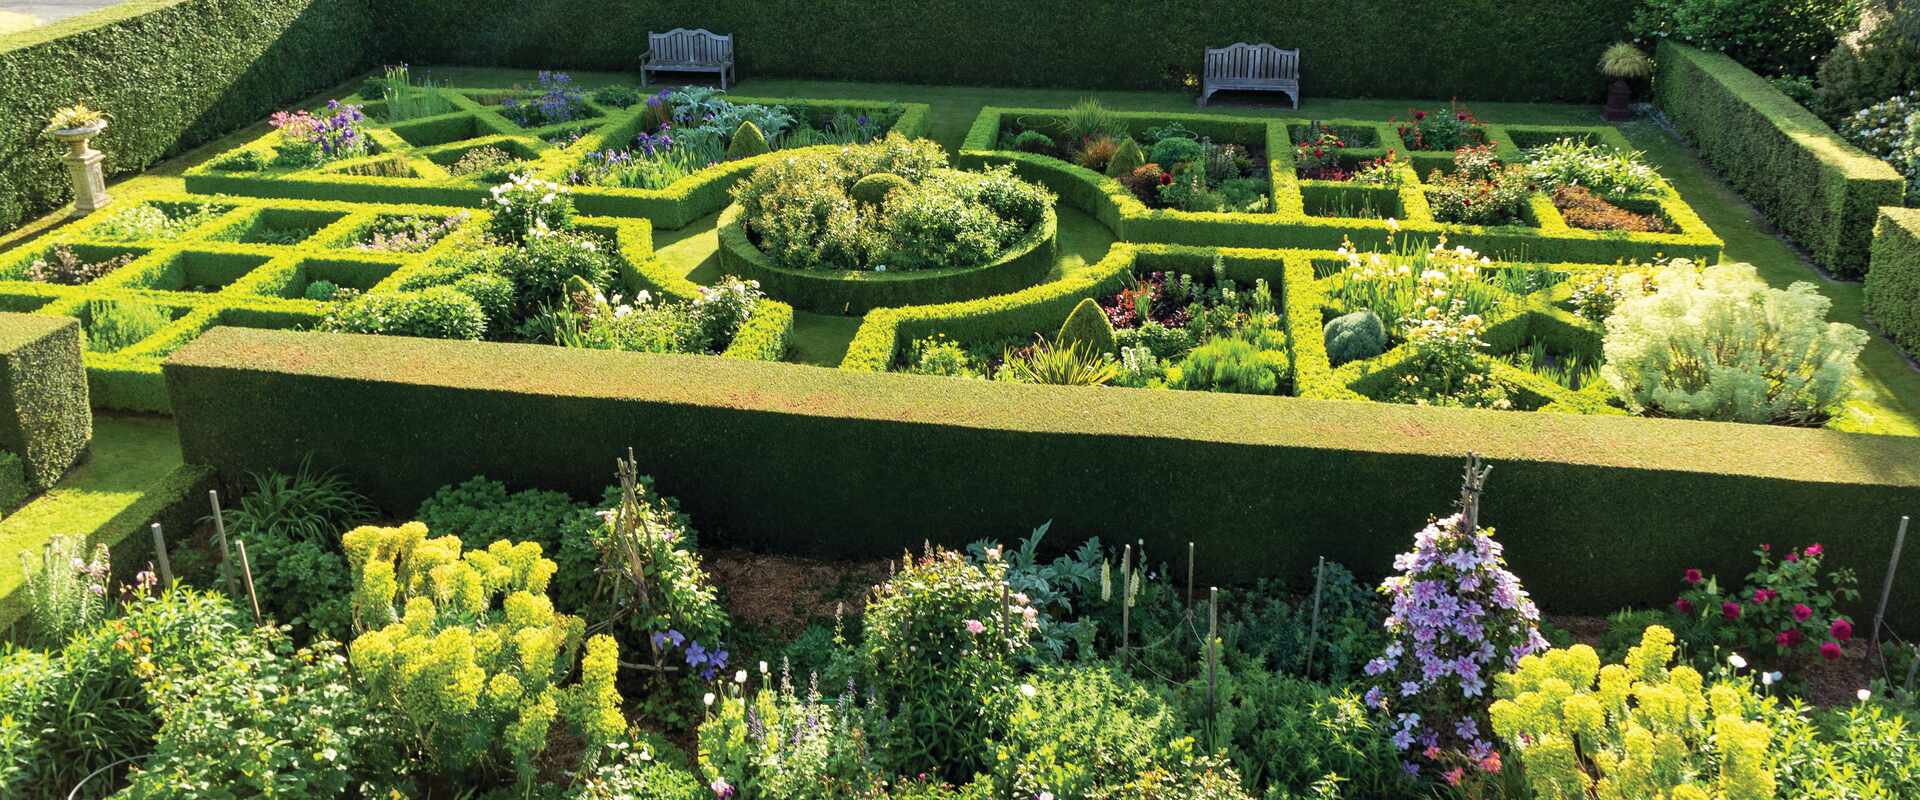 maze topiary herbs upton oaks garden blenheim, new zealand